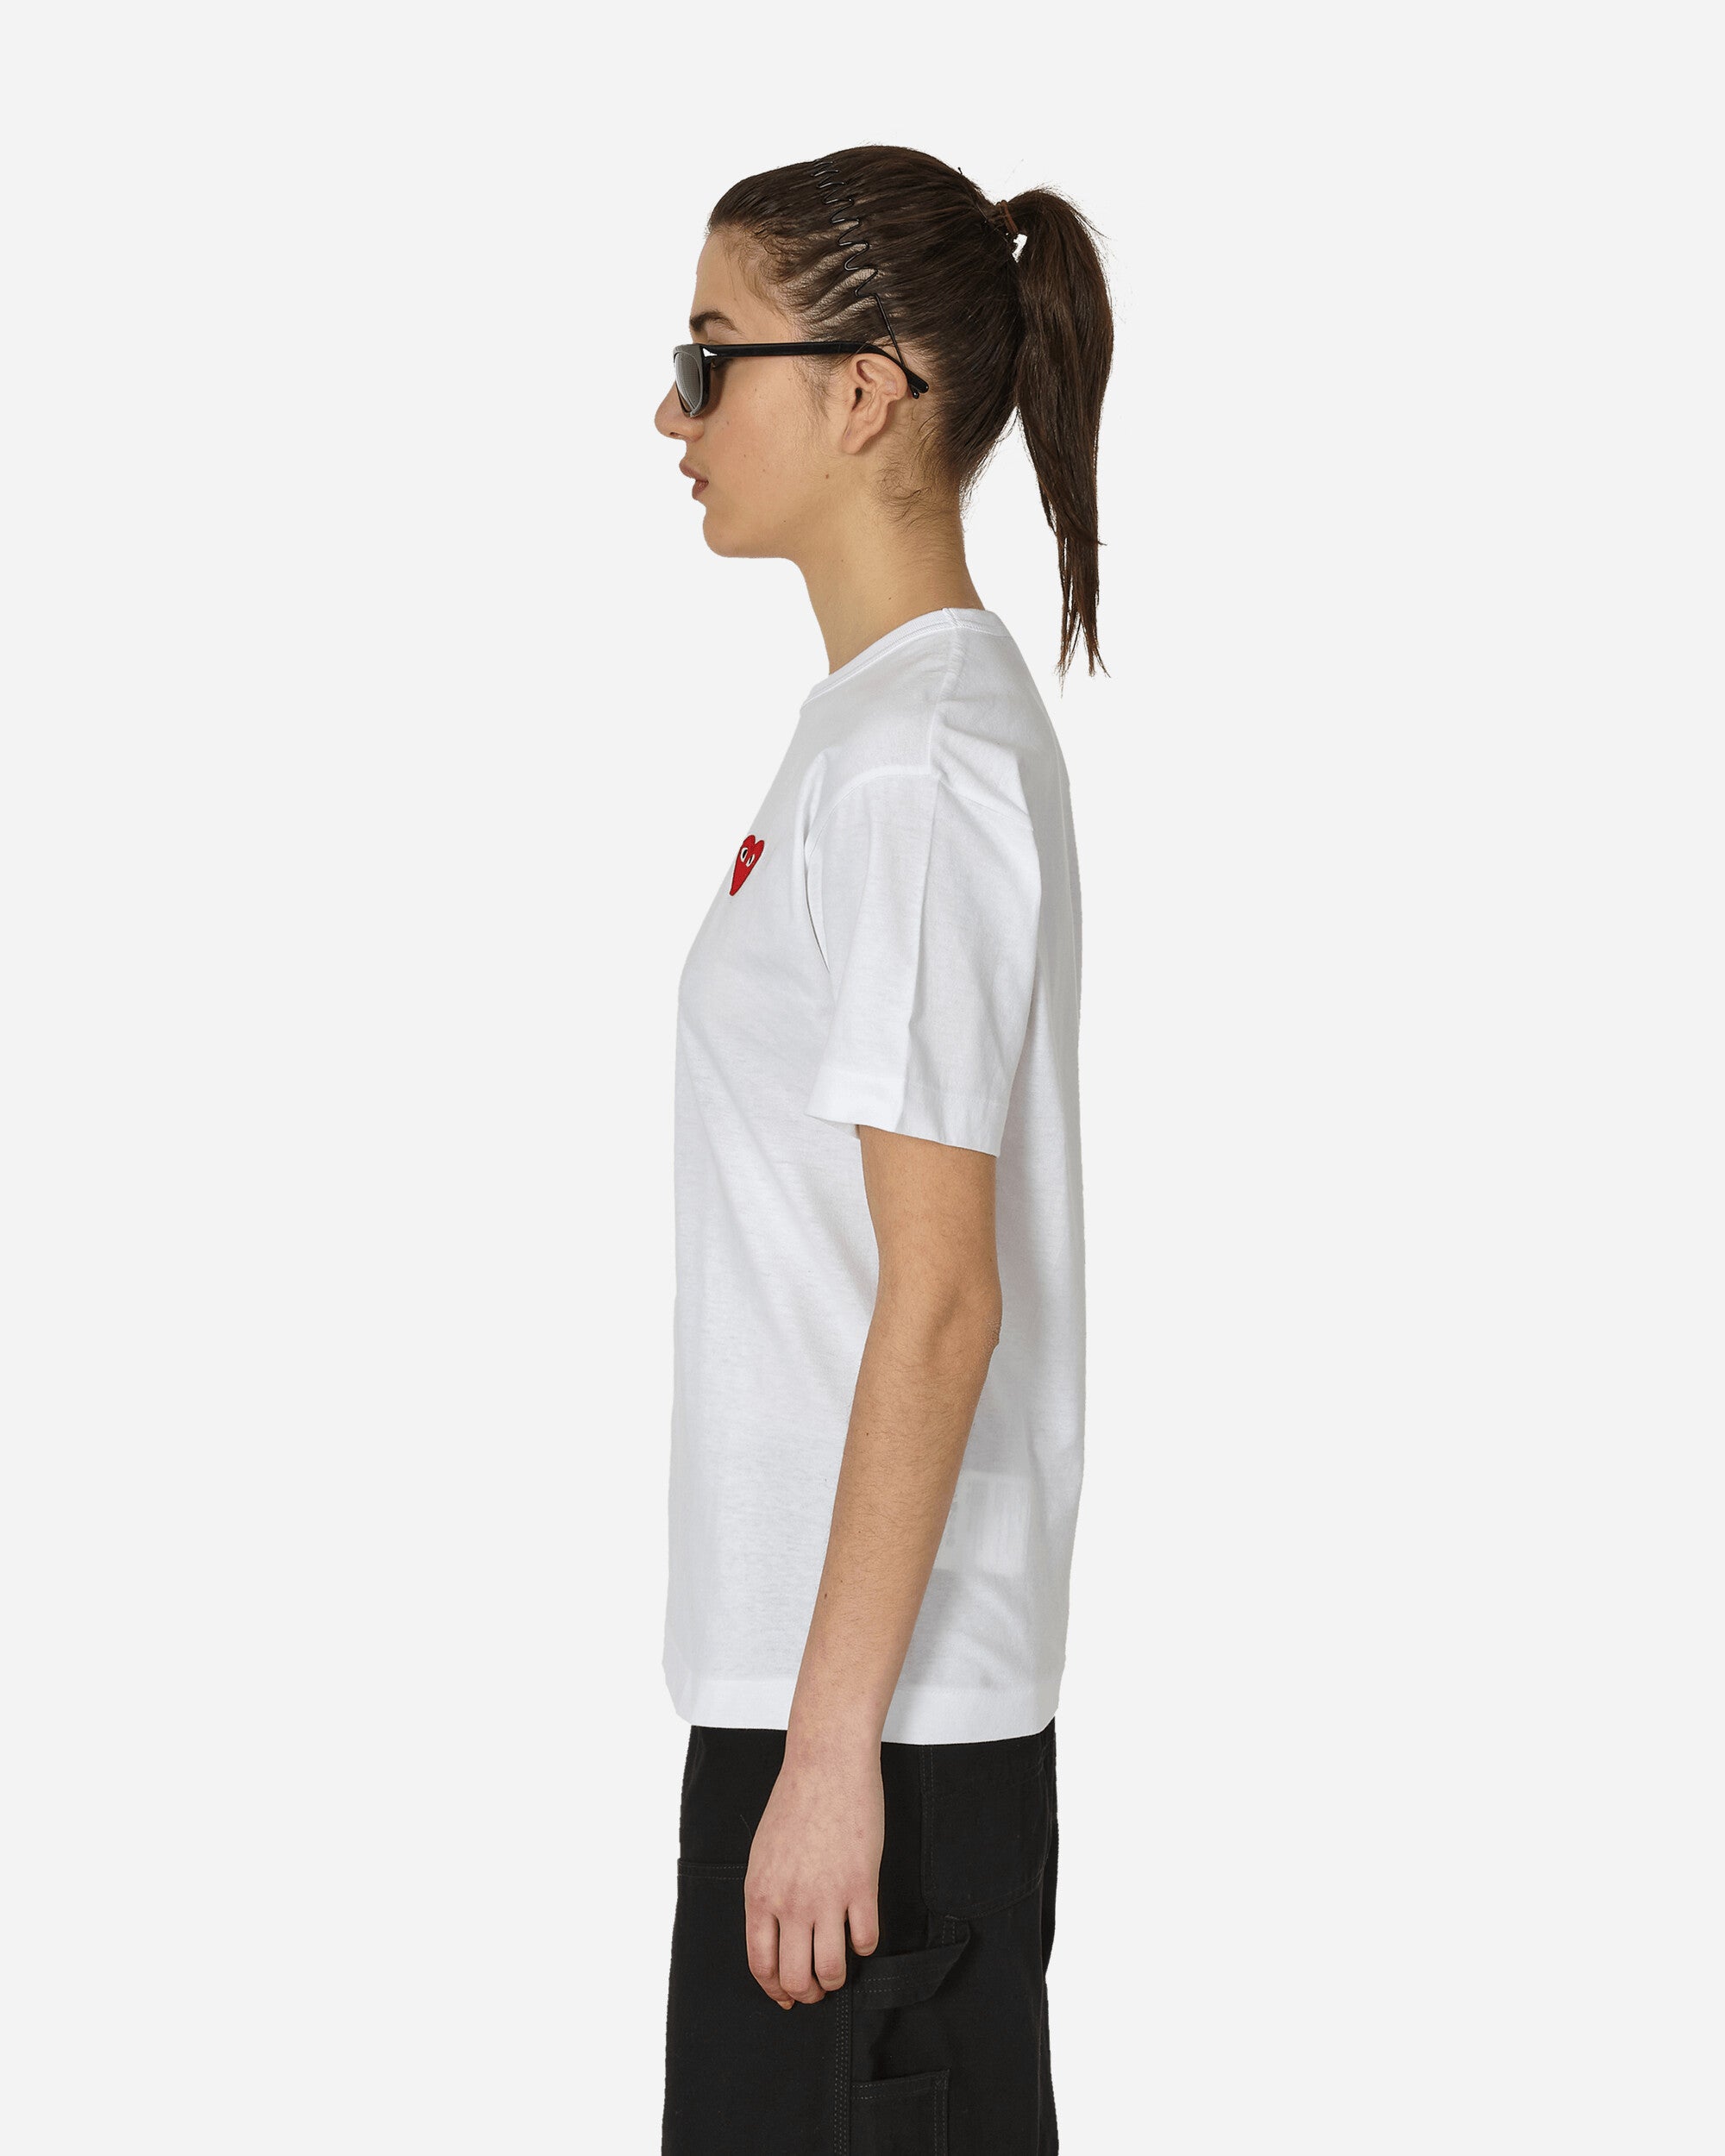 Comme Des Garçons Play T-Shirt Short Sleeve Knit White T-Shirts Shortsleeve P1T108  2